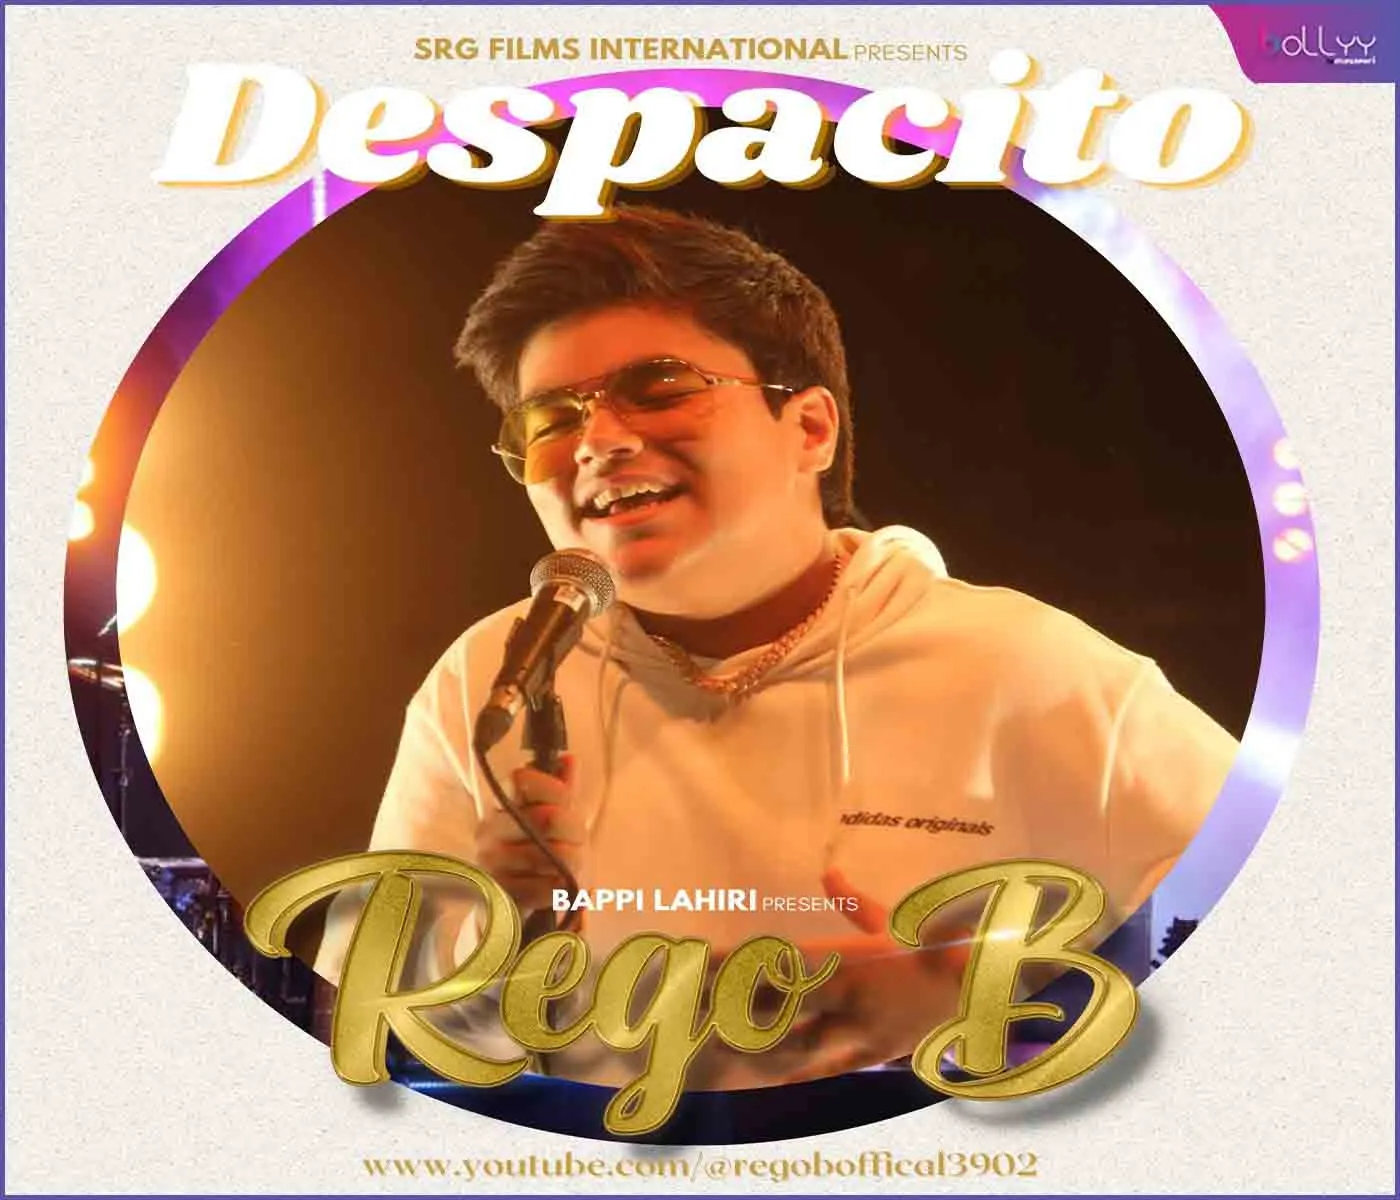 Rego B's music album of International hits DESPACITO